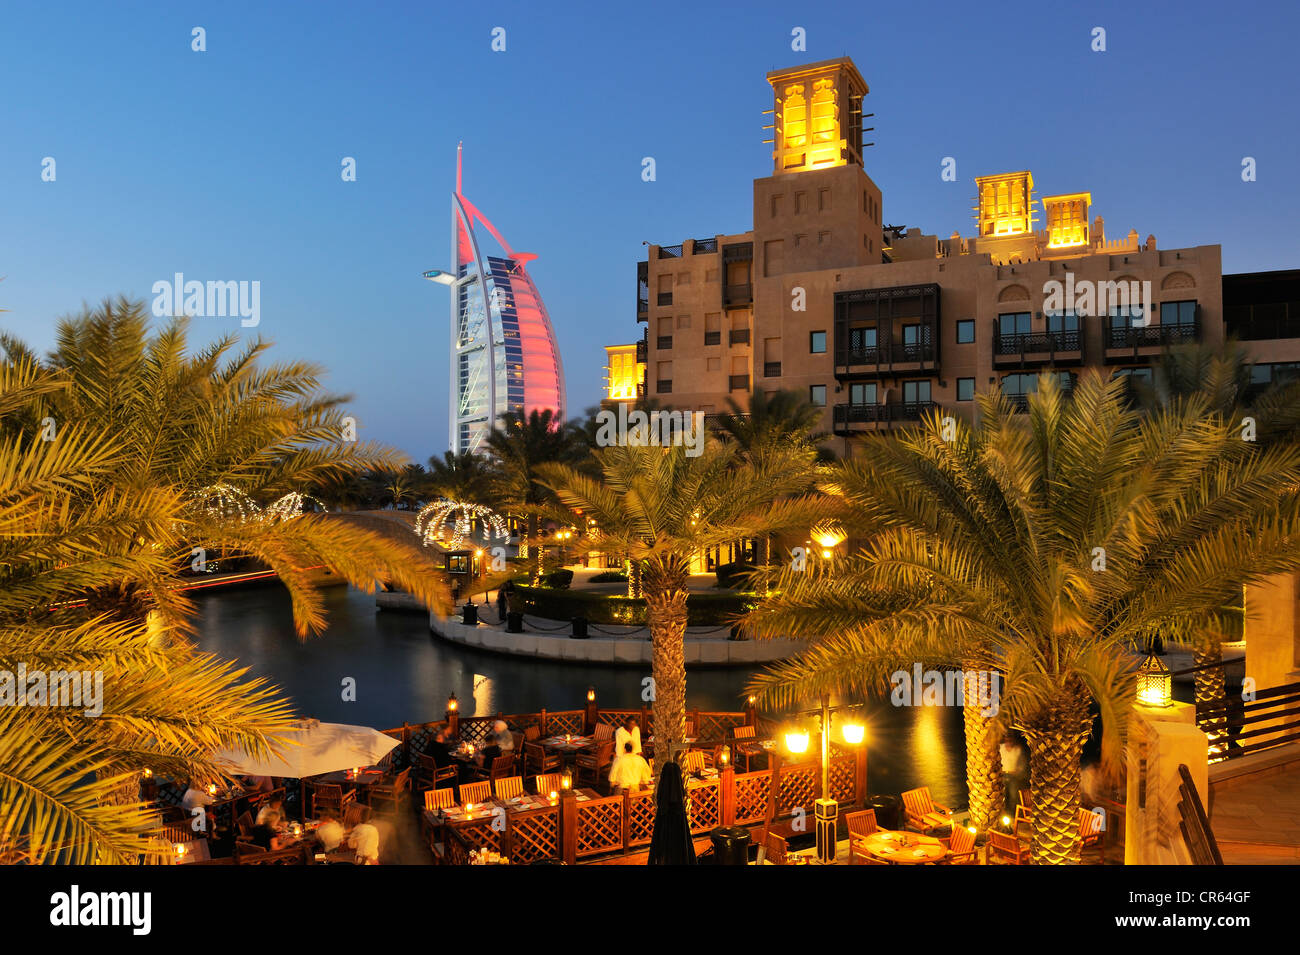 Burj al Arab, 7-star hotel, seen from the Souk Madinat, Jumeirah, Dubai, United Arab Emirates, Middle East Stock Photo